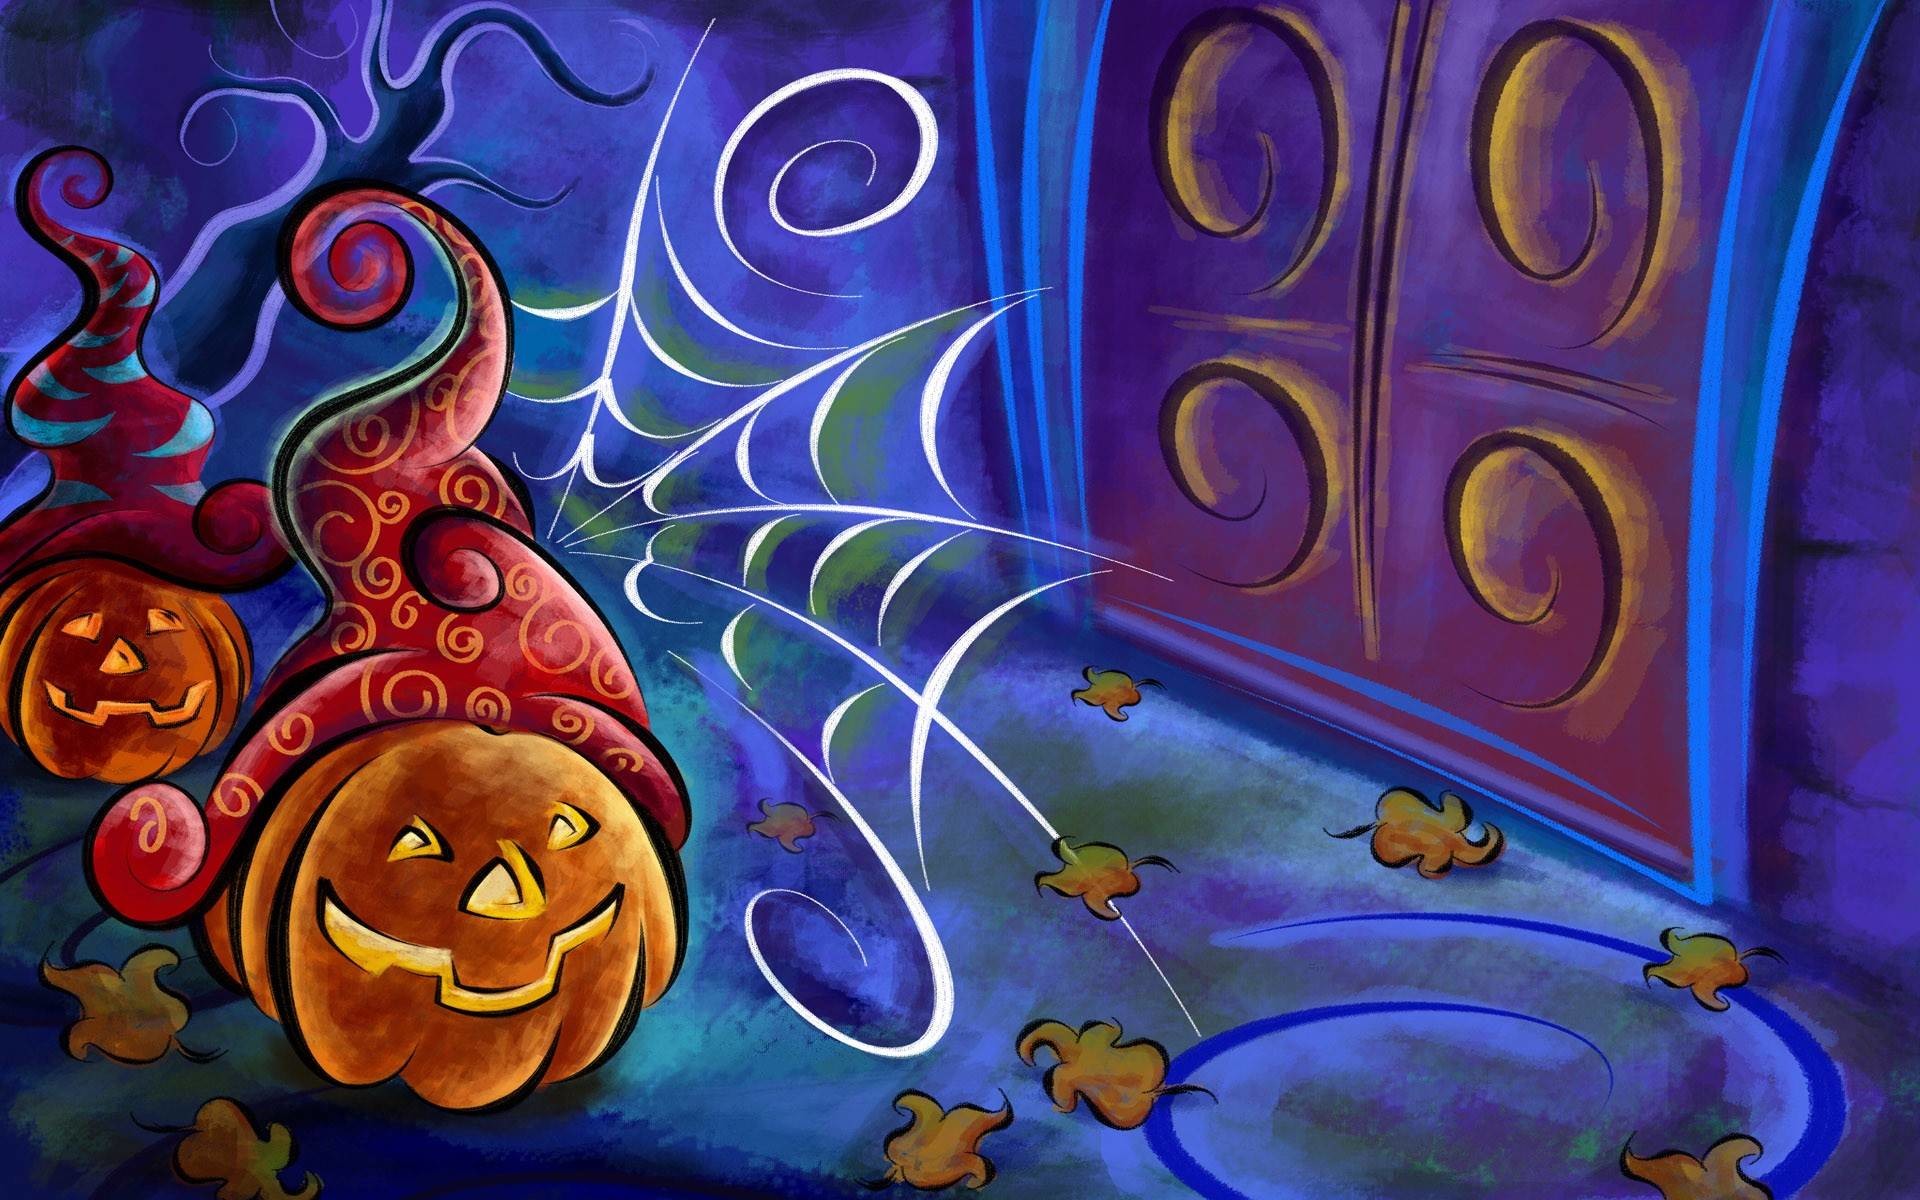 Halloween screensavers wallpapers – www.wallpaper free download.com